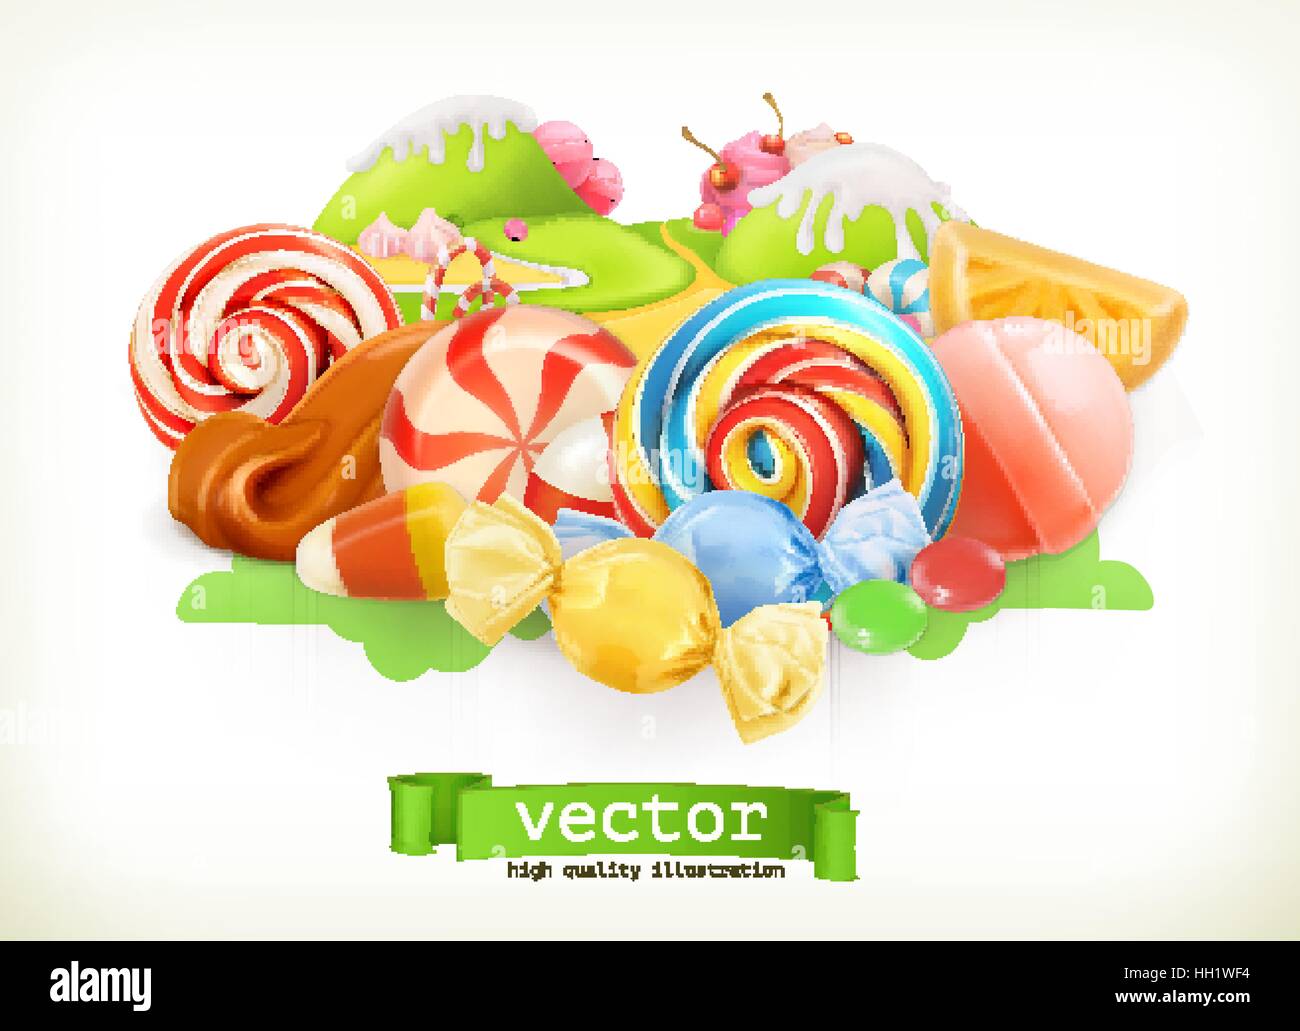 Süßwarenladen. Wirbel-Bonbons, Lutscher, Karamell. Bonbon-Land. 3D Vektor-illustration Stock Vektor